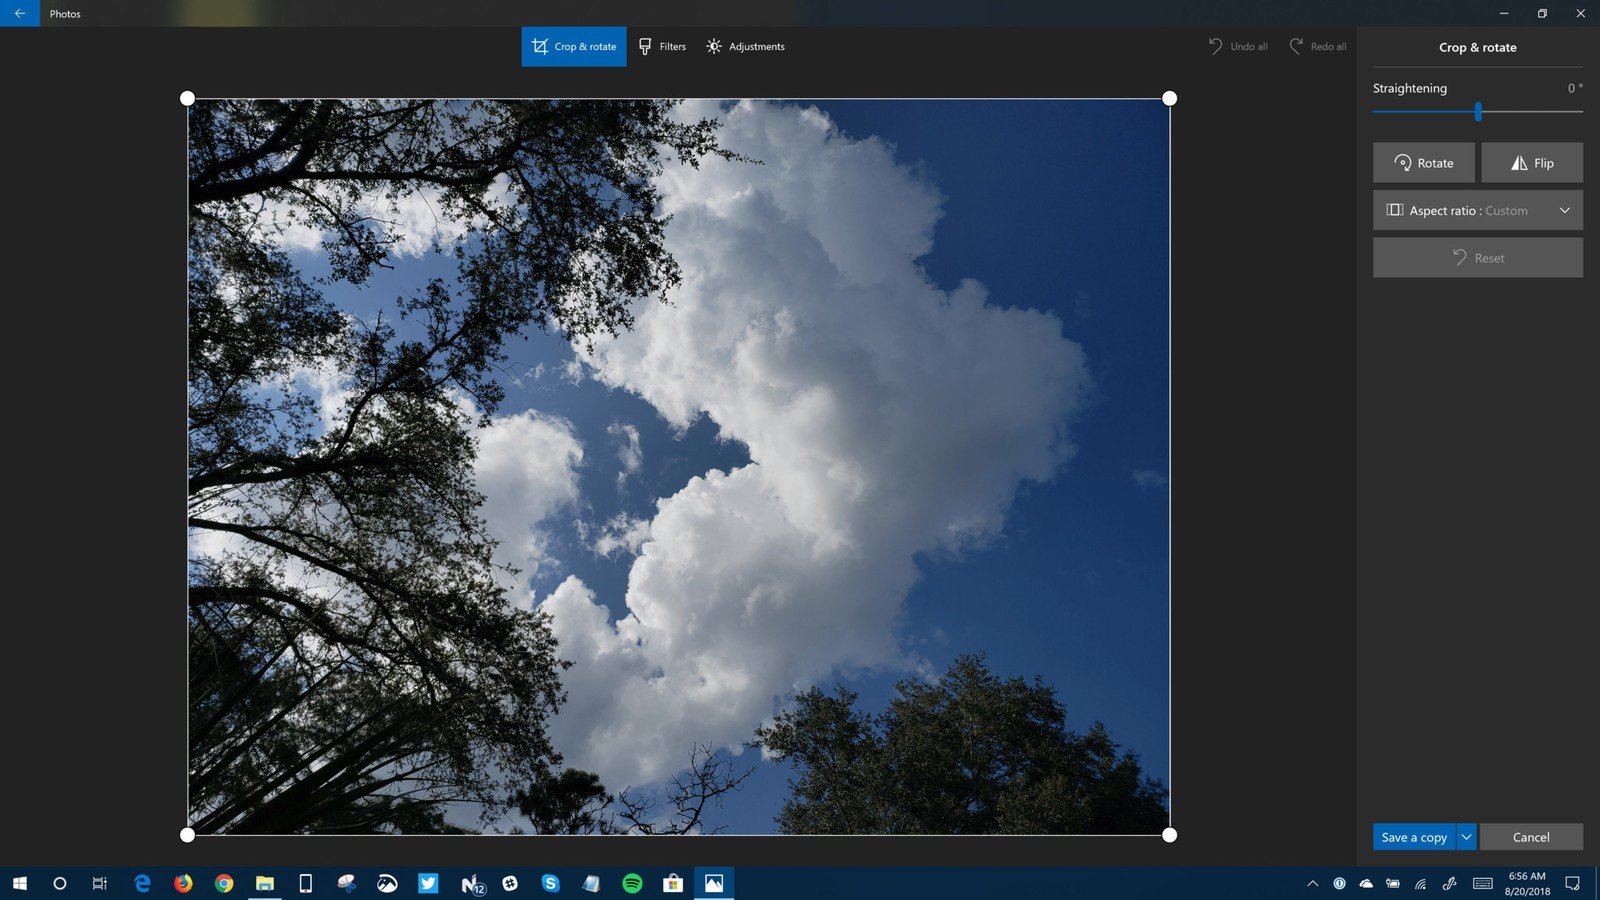  Microsoft  updates the Windows  10  Photos  app editing  